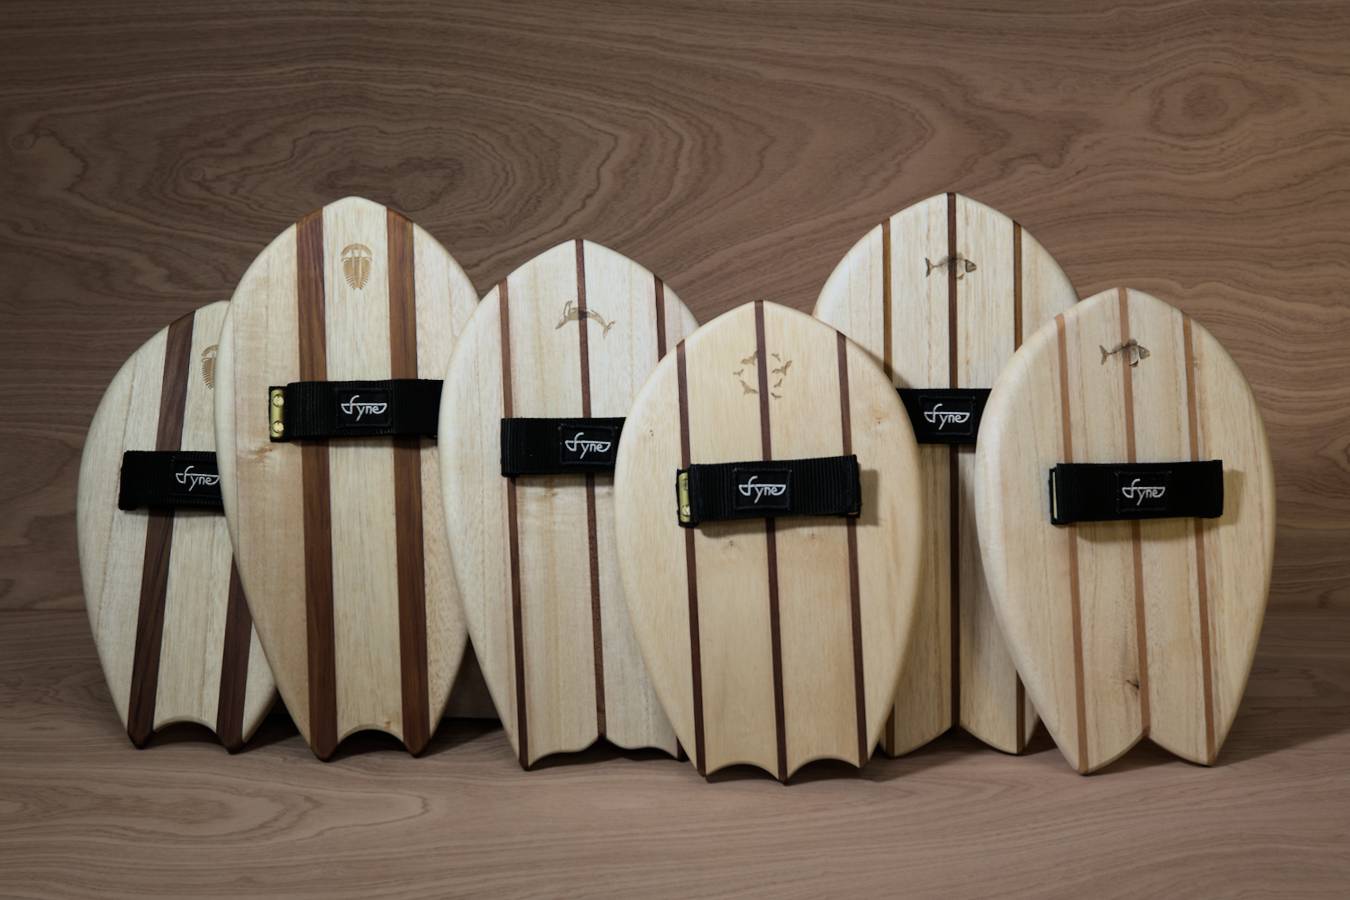 Handmade Paulownia wood handplanes in all their shapes by Fyne Boat Kits